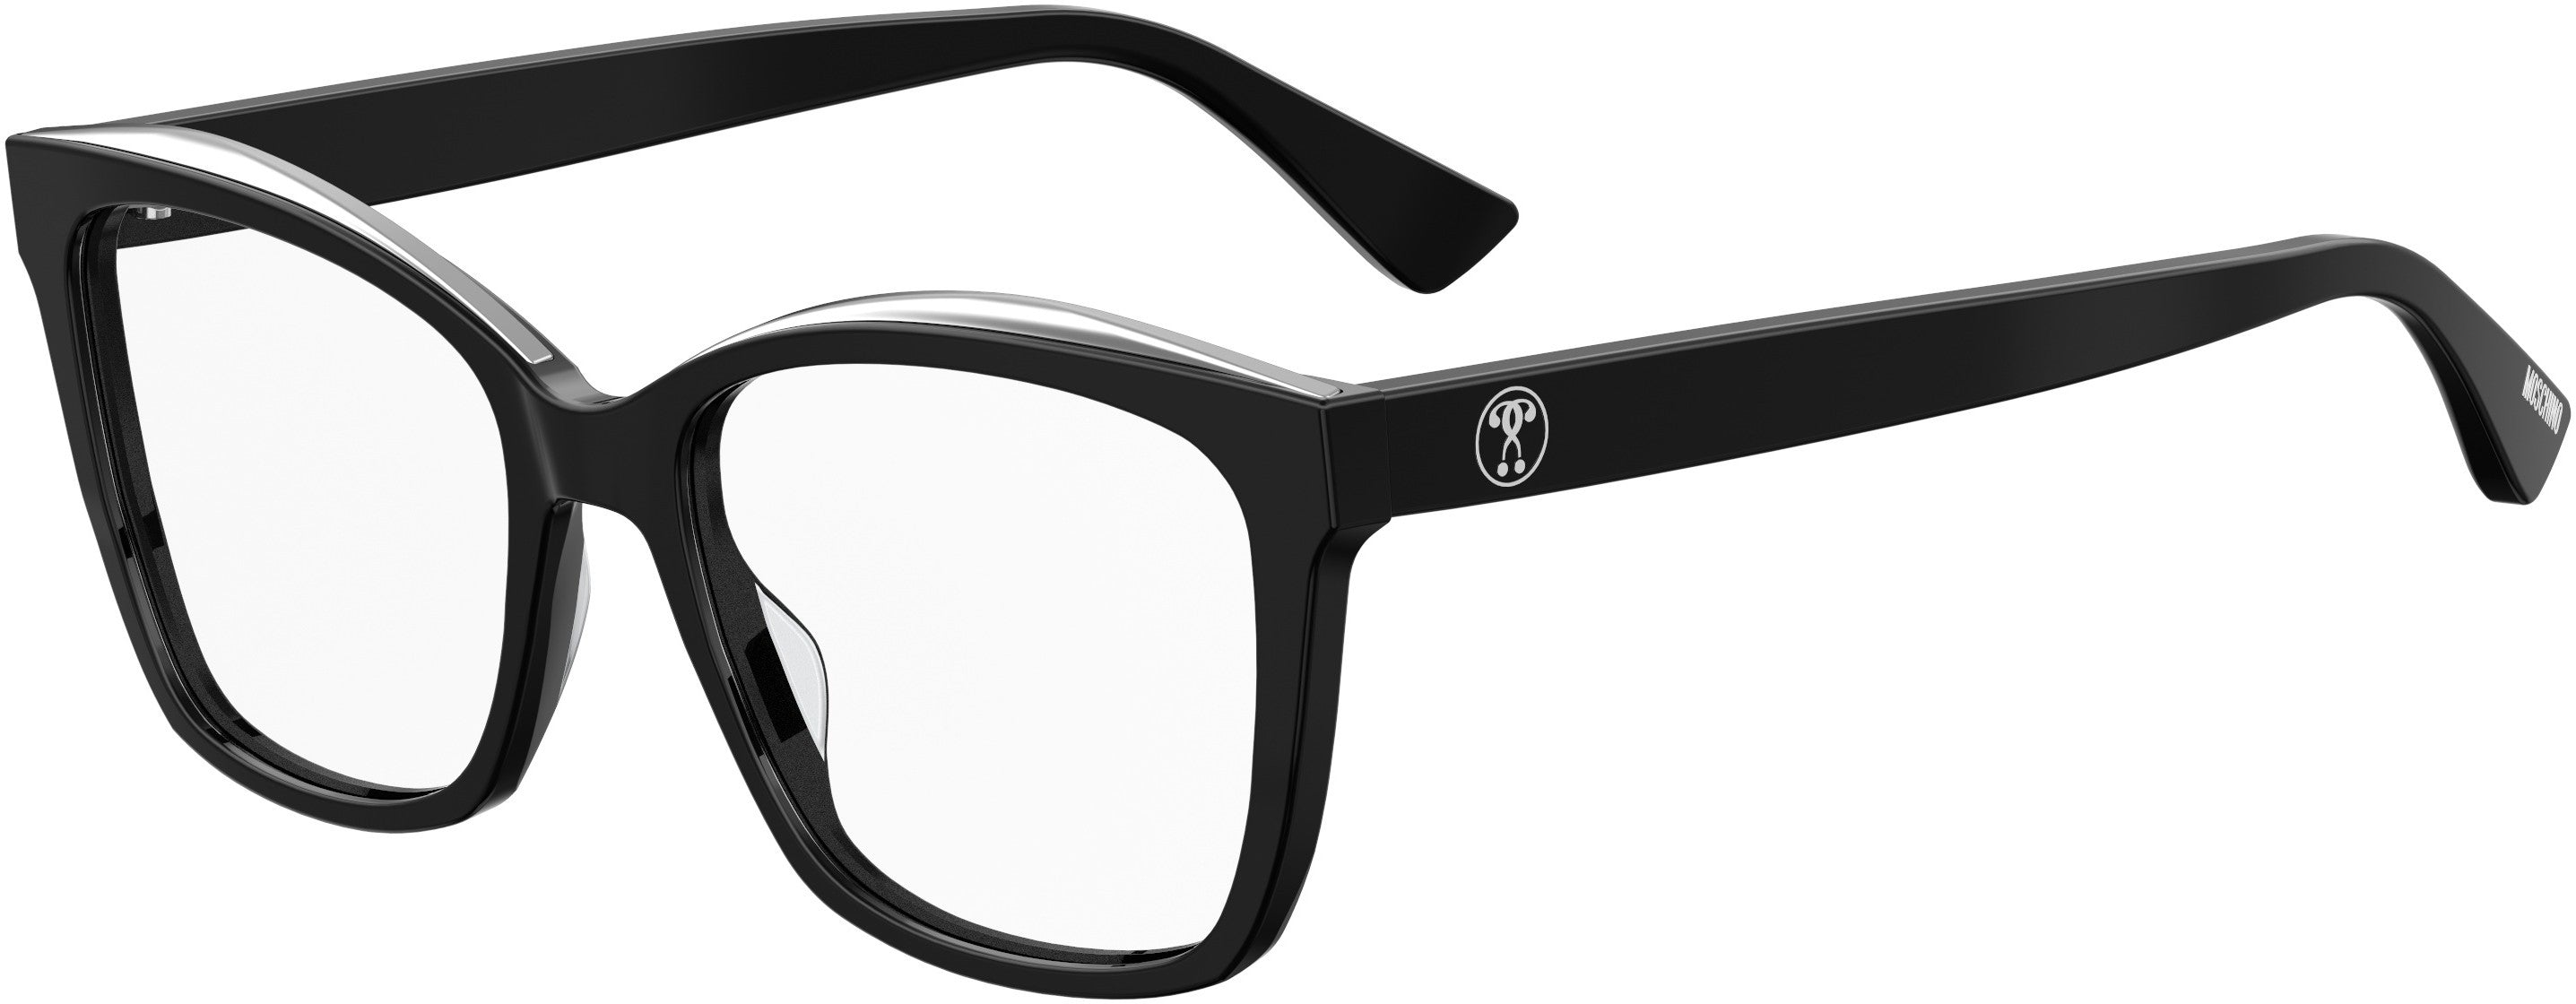  Moschino 528 Rectangular Eyeglasses 0807-0807  Black (00 Demo Lens)